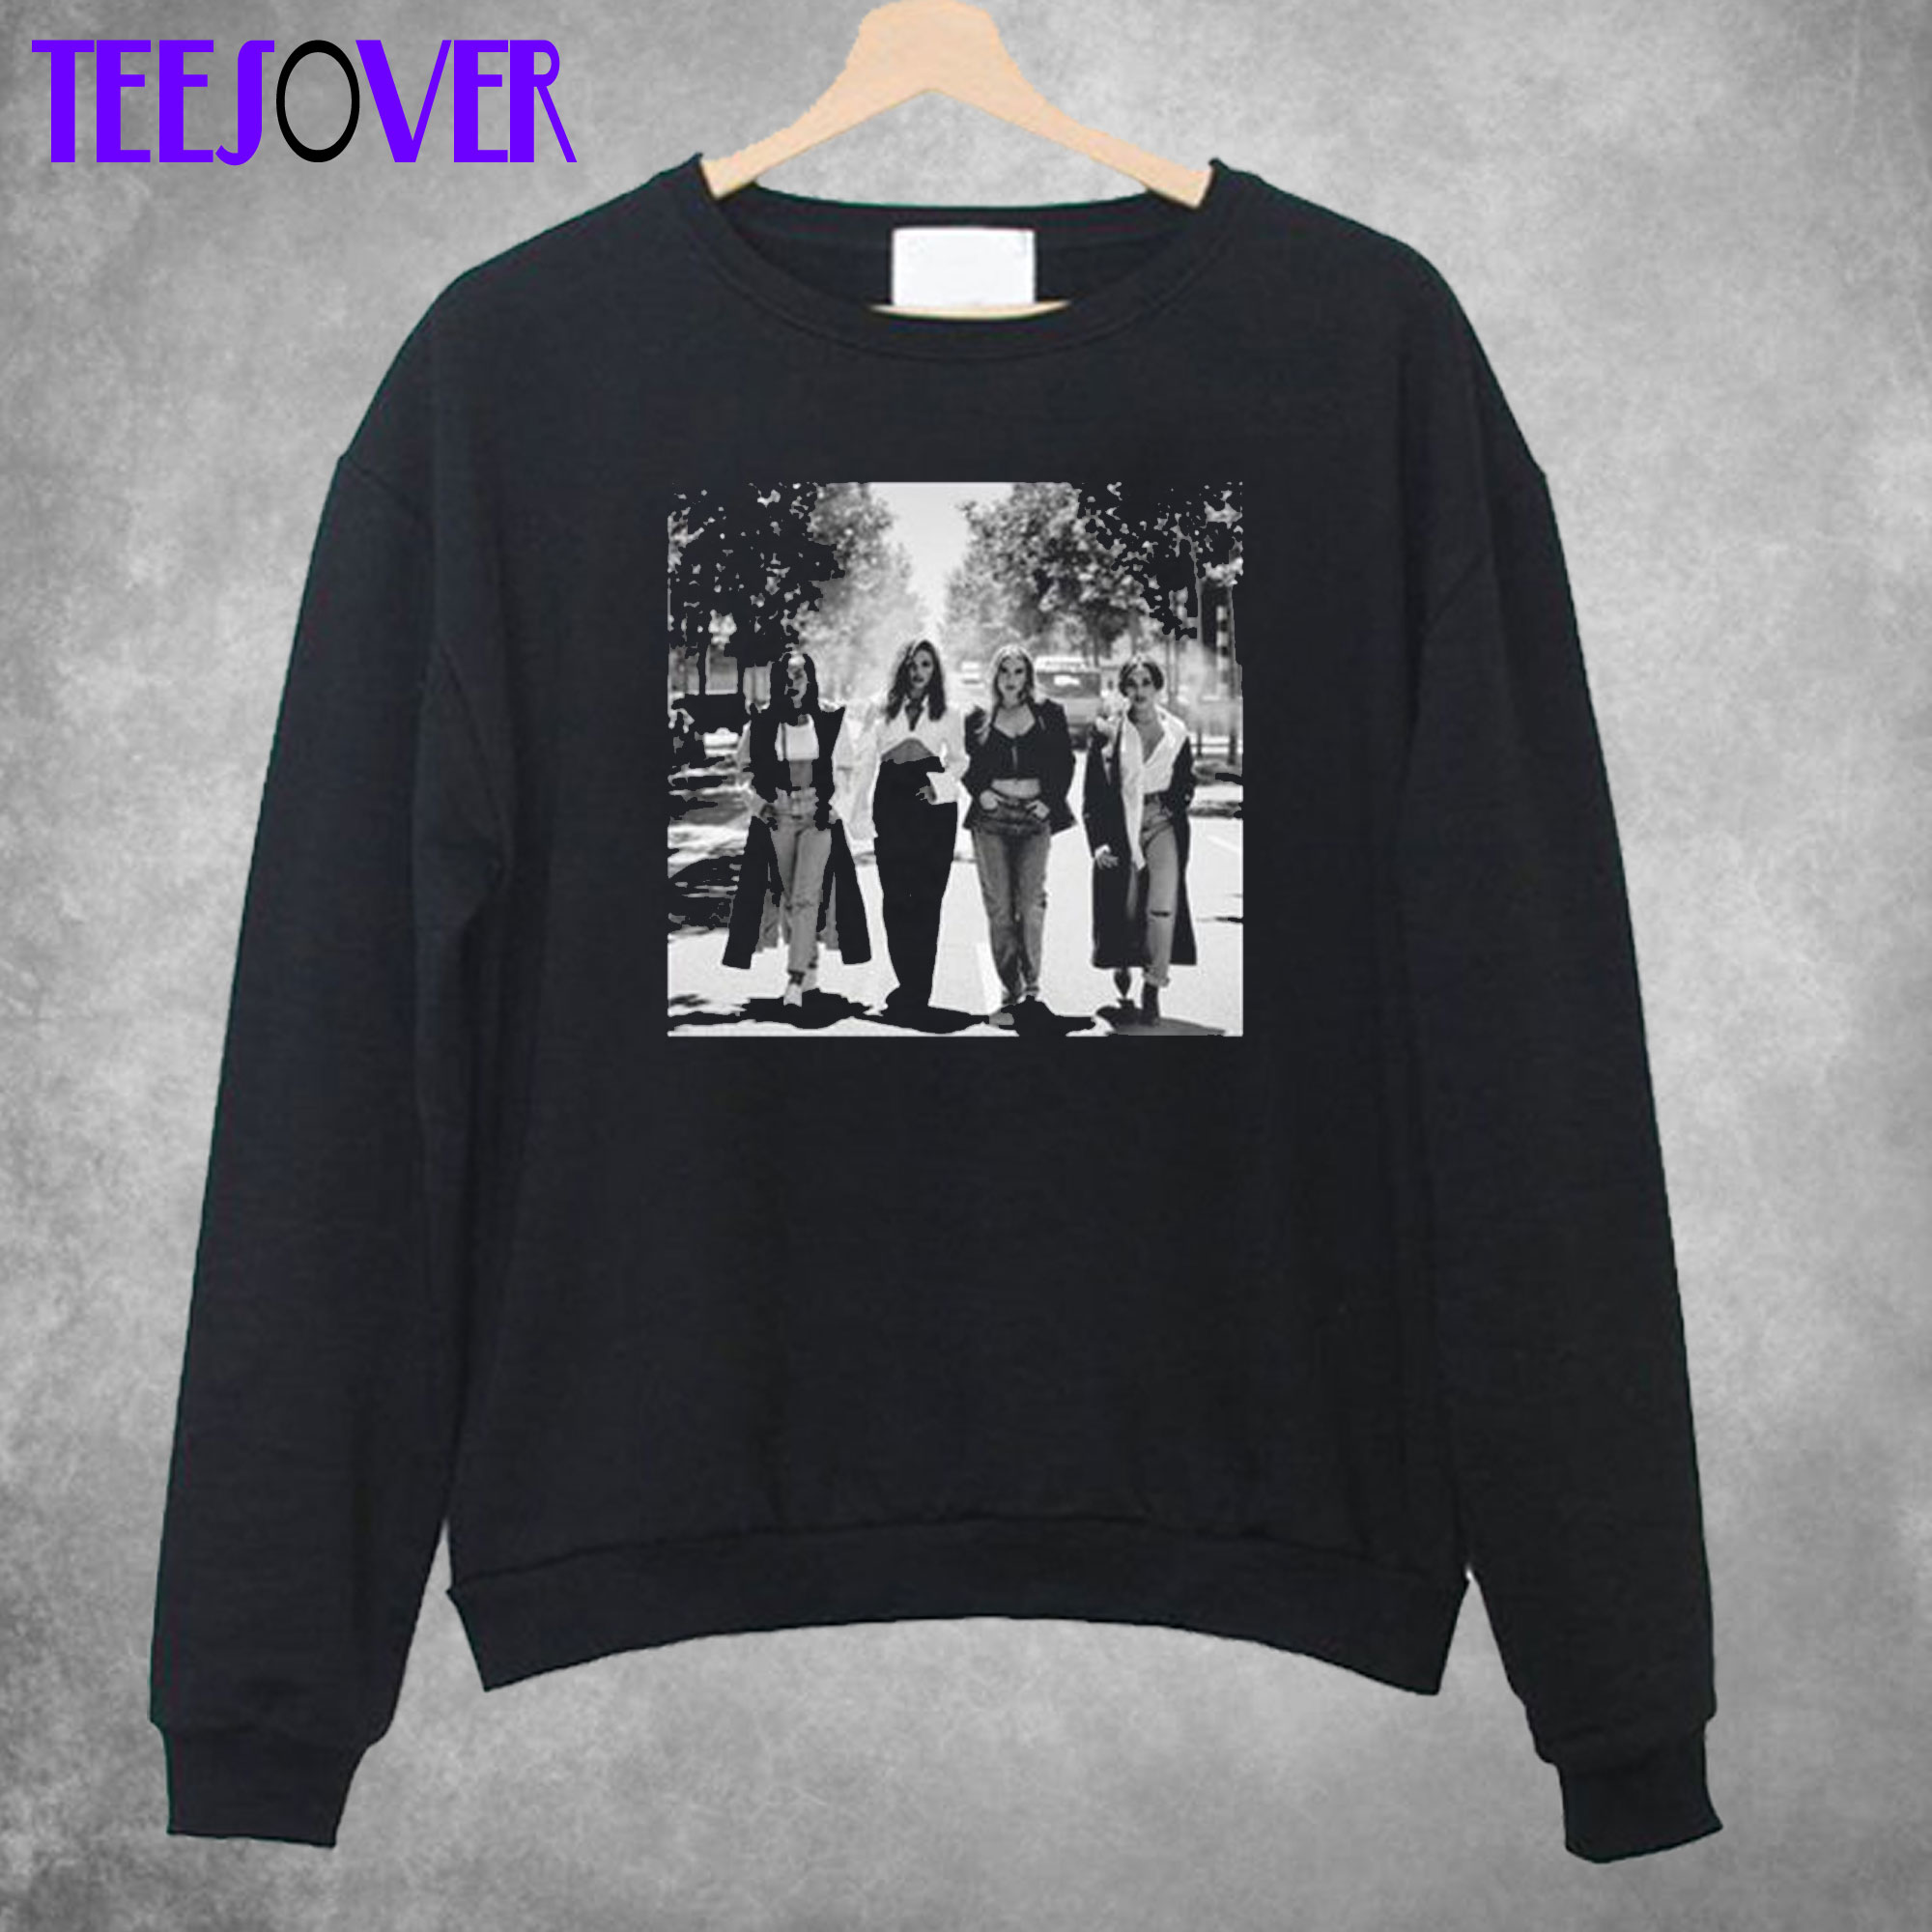 LM5 Deluxe Album Black & White Sweatshirt